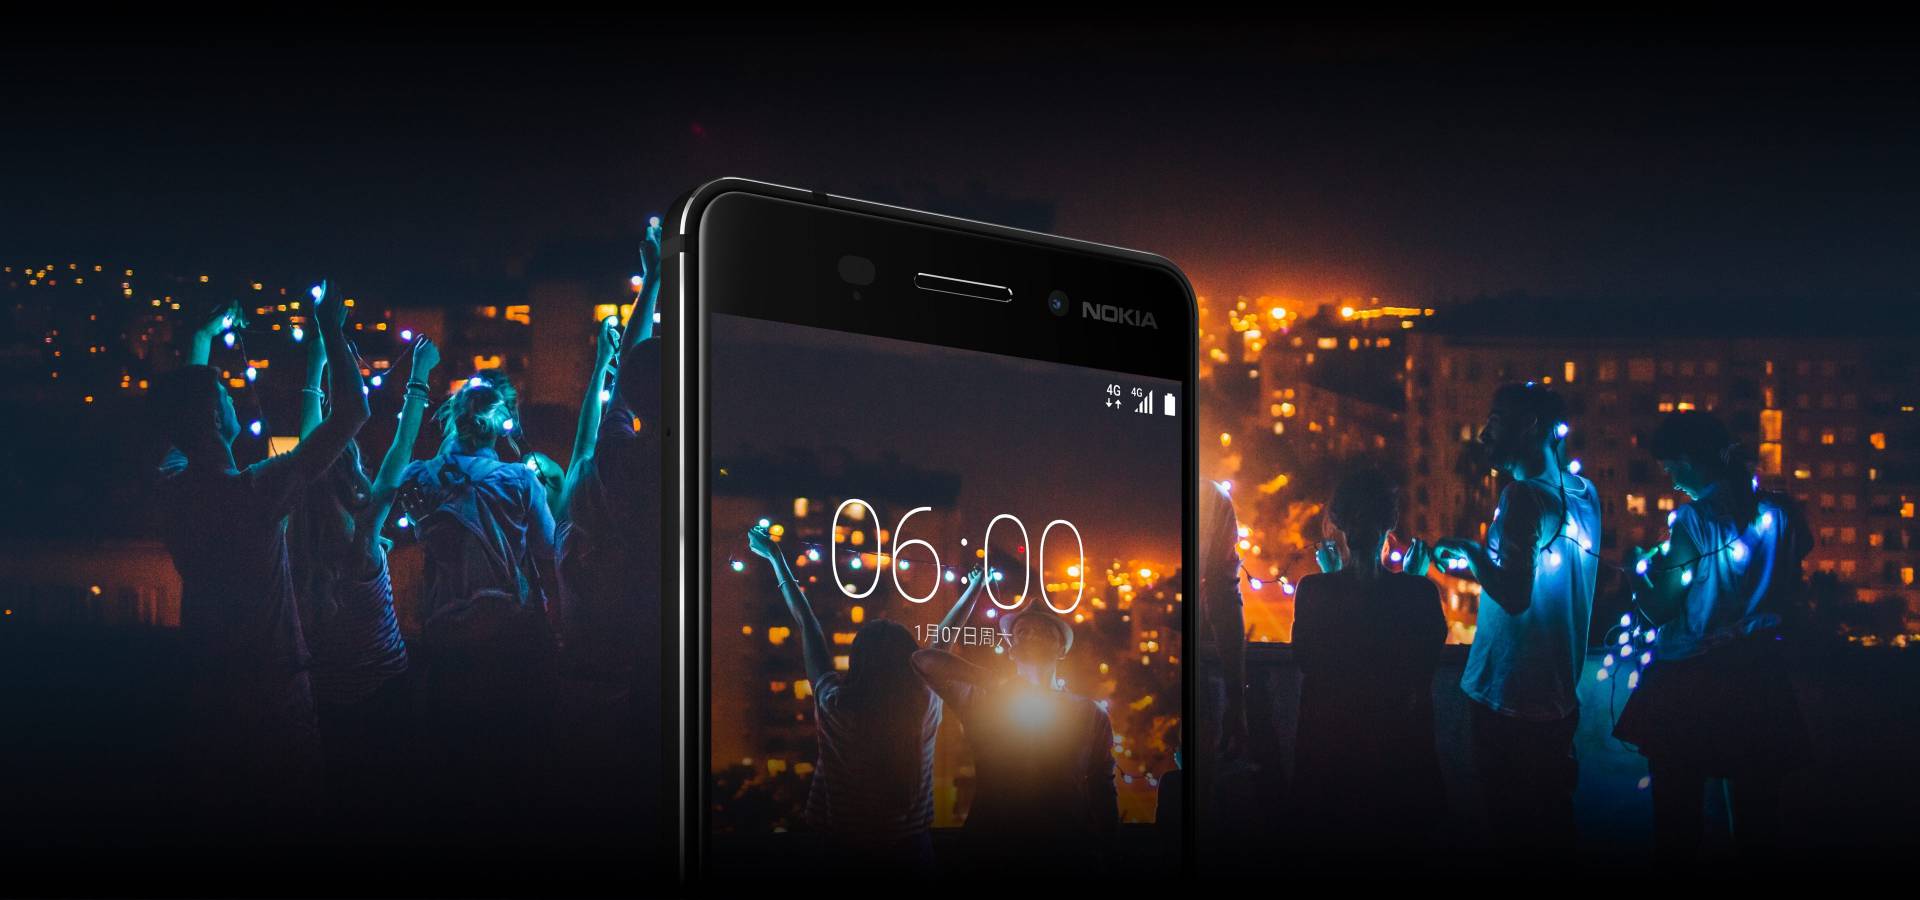 Nokia 3 će dobiti Snapdragon 425 i HD ekran od 5,2 inča